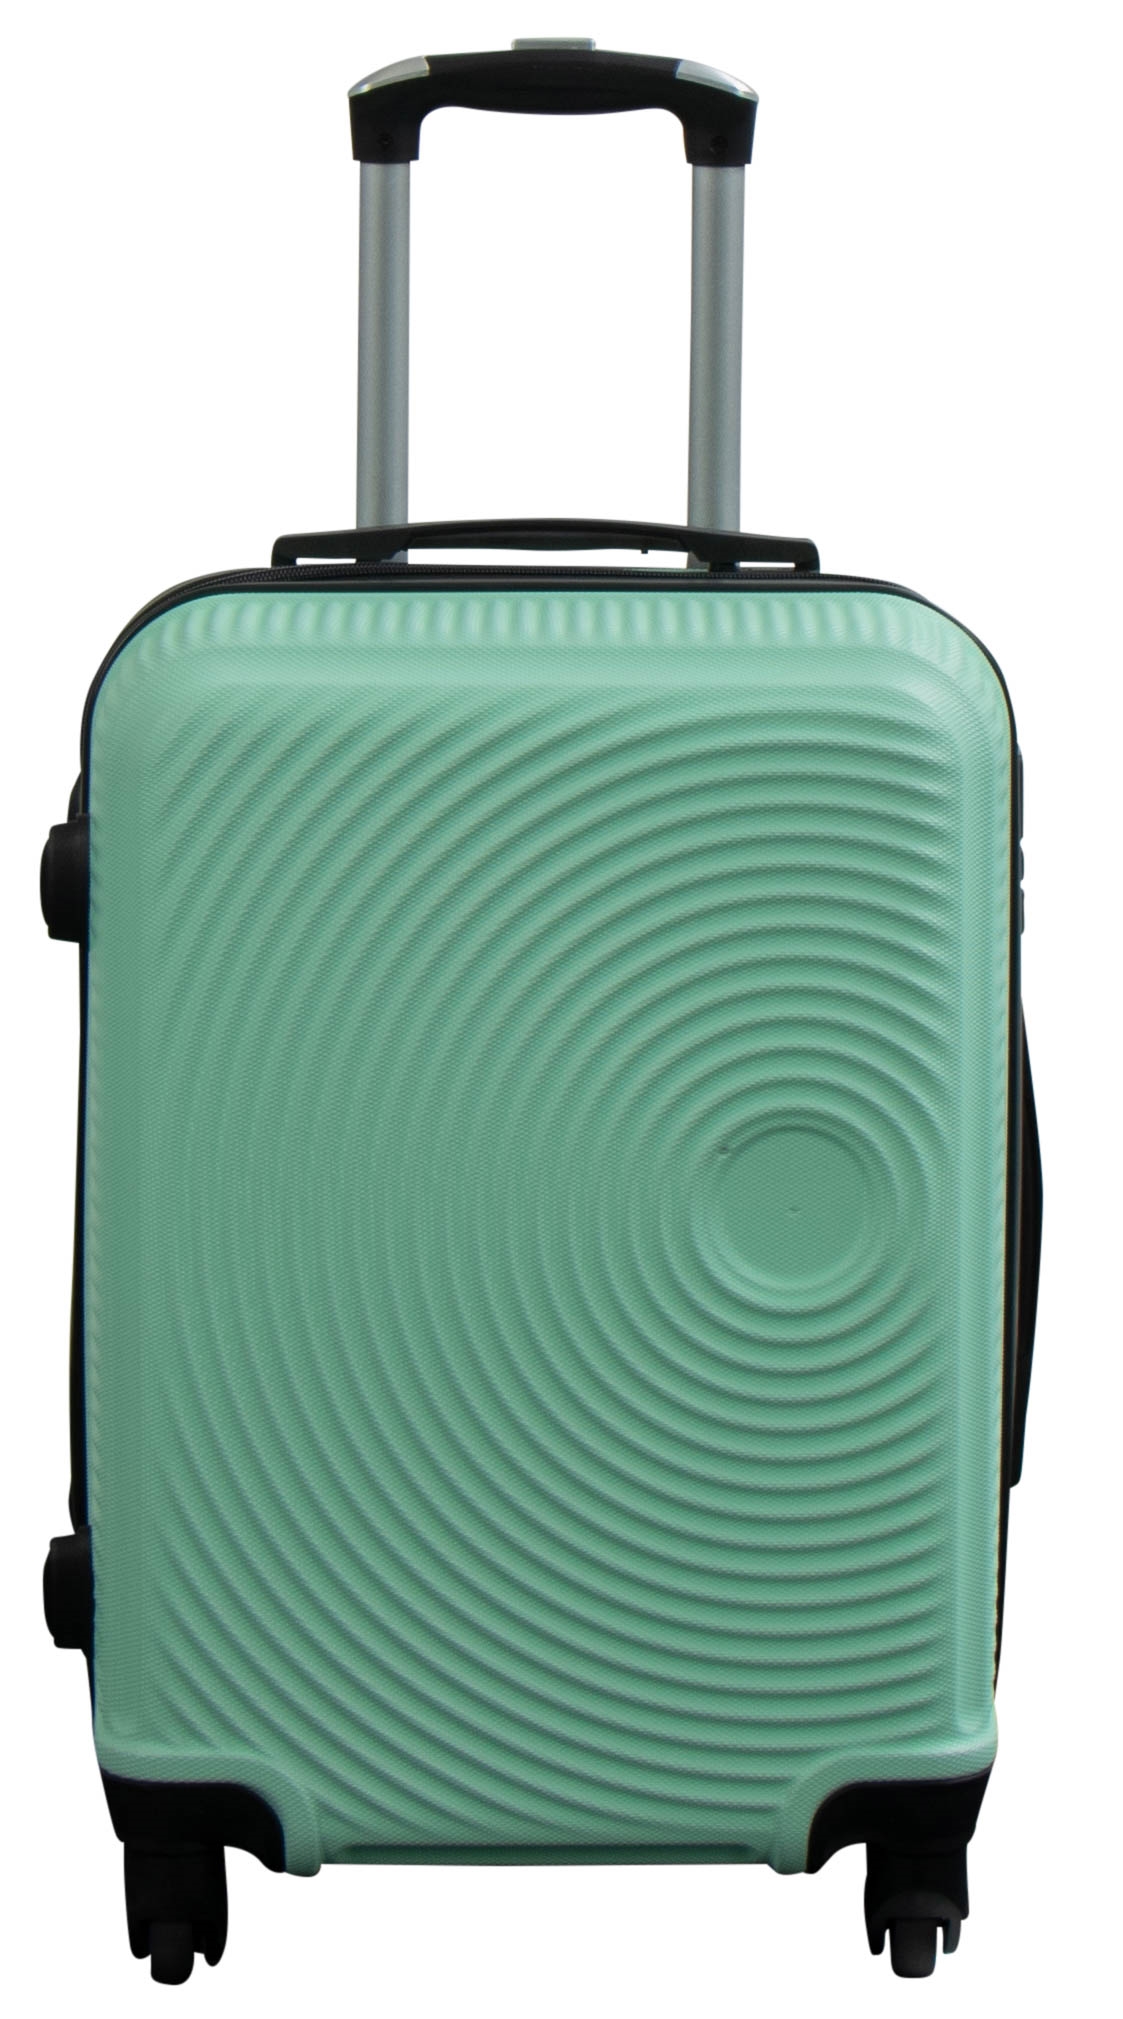 Kabine • Lille håndbagage kuffert • Pastel grøn